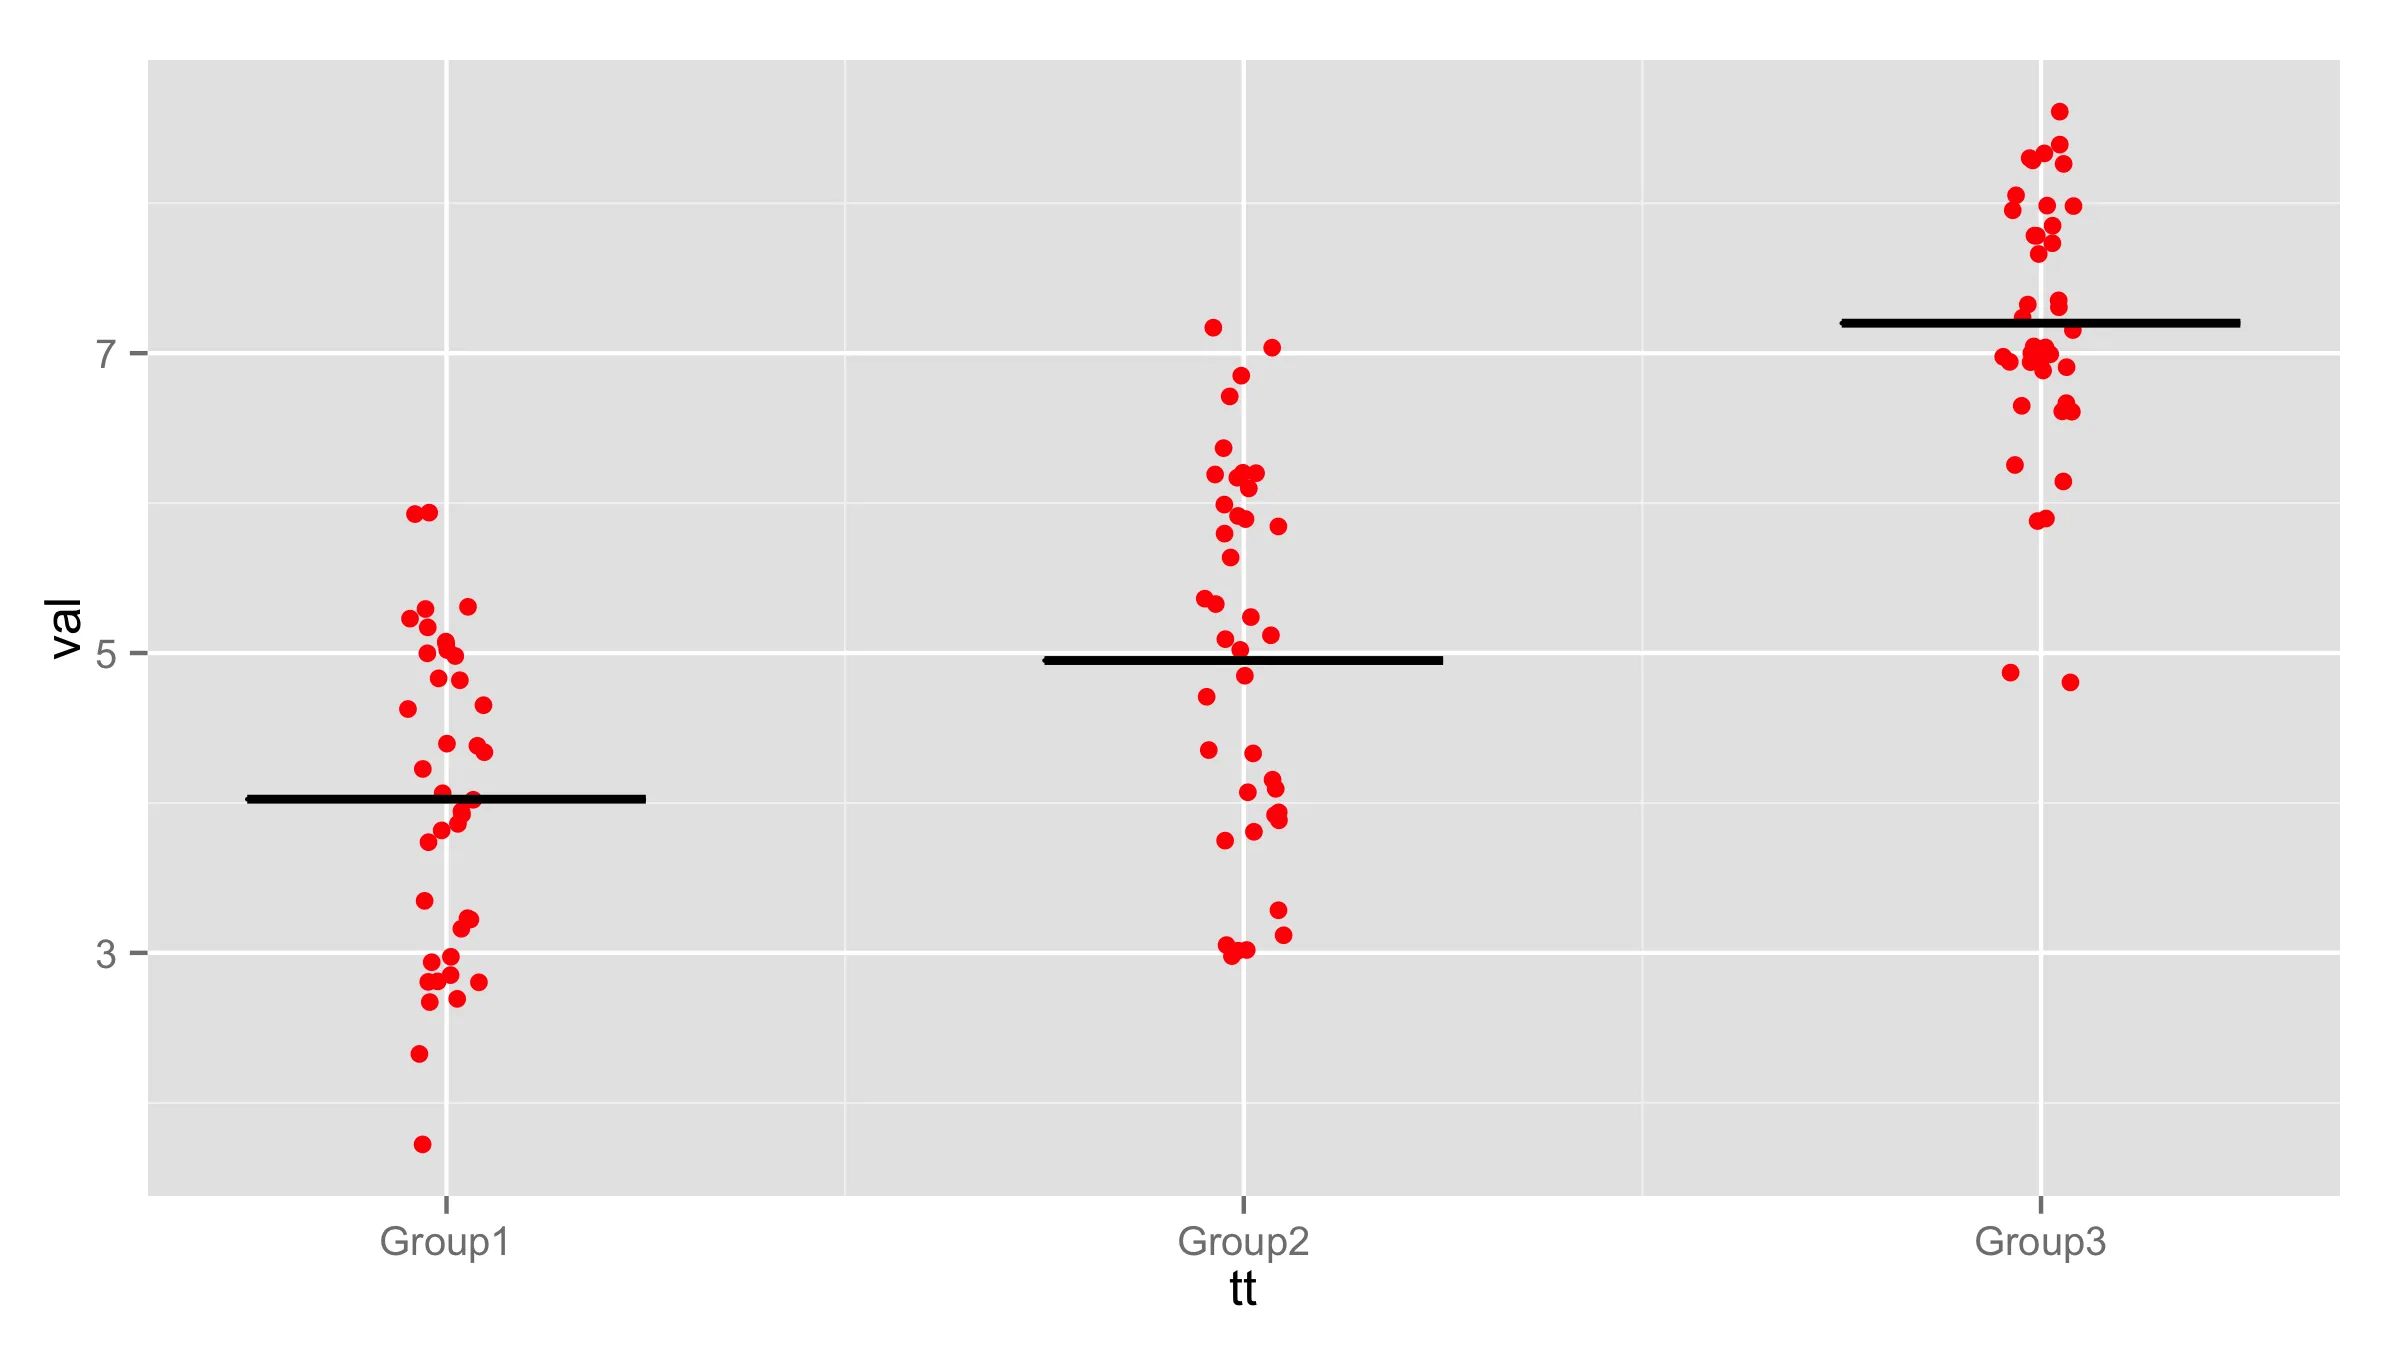 Categorical scatter plot in R